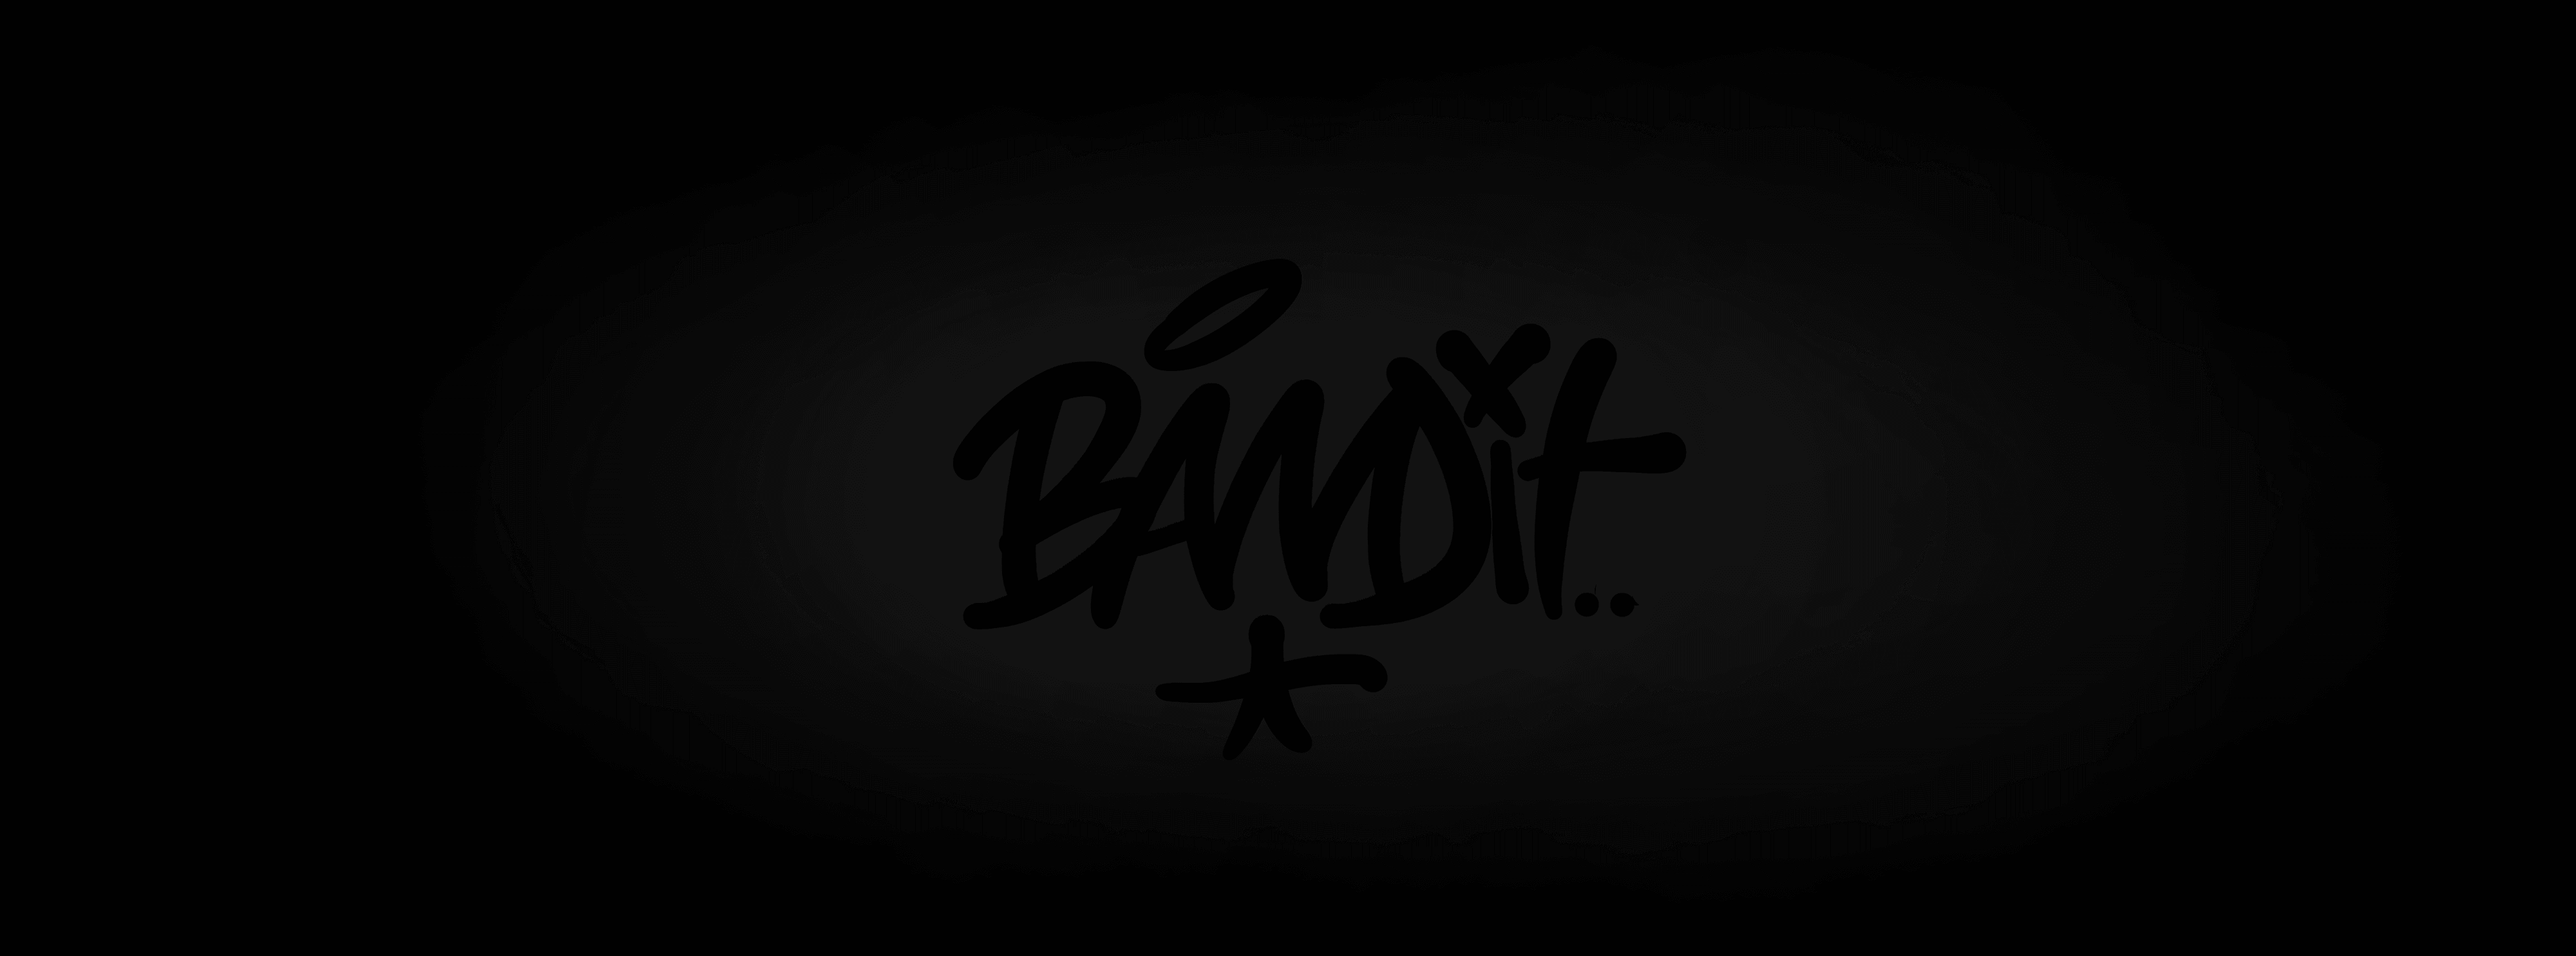 BANDIT-ONE banner